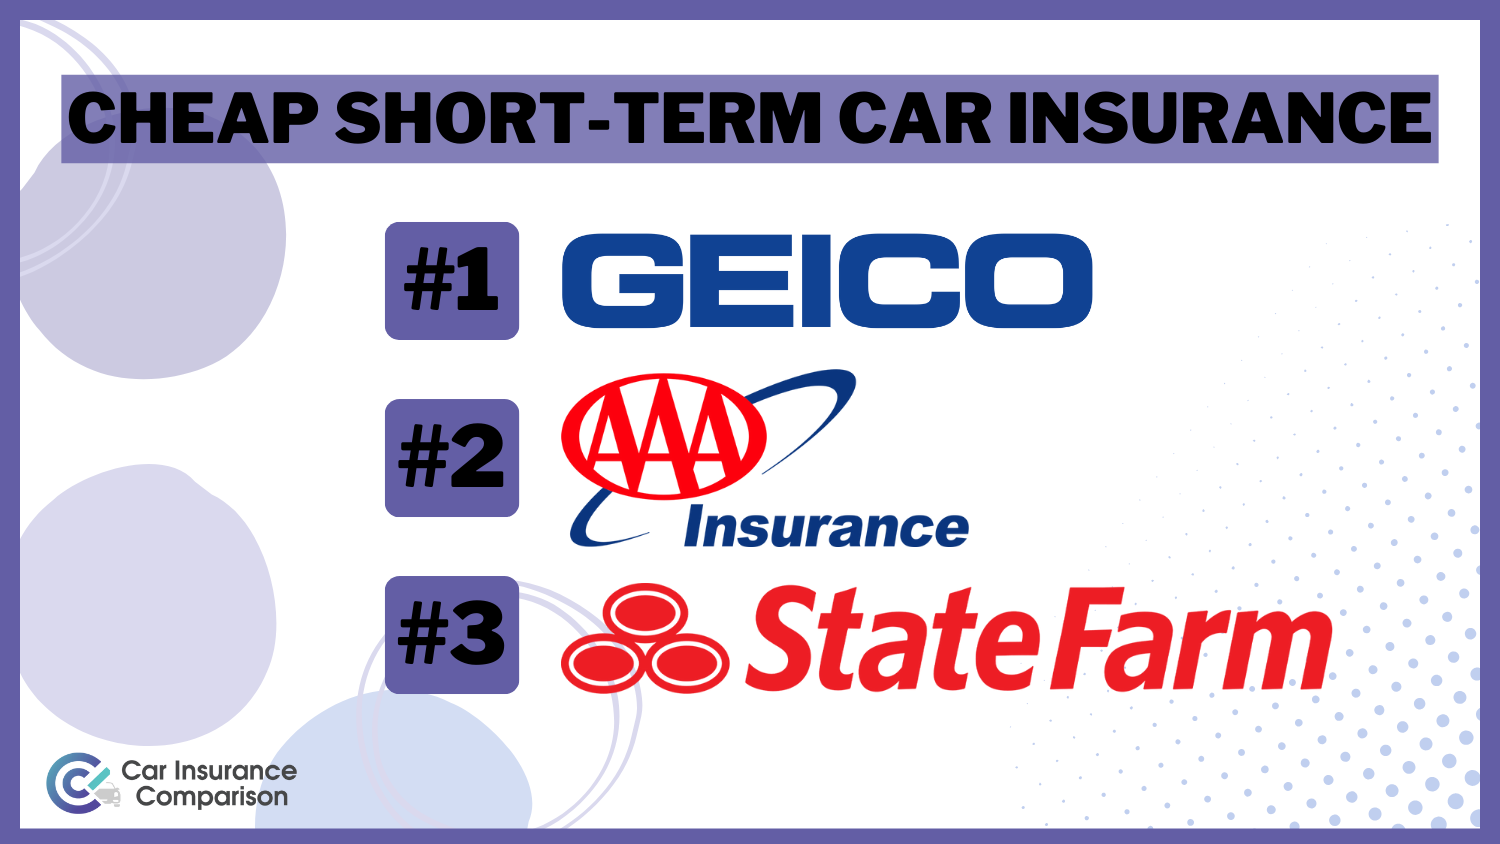 Cheap Short-Term Car Insurance - CIC